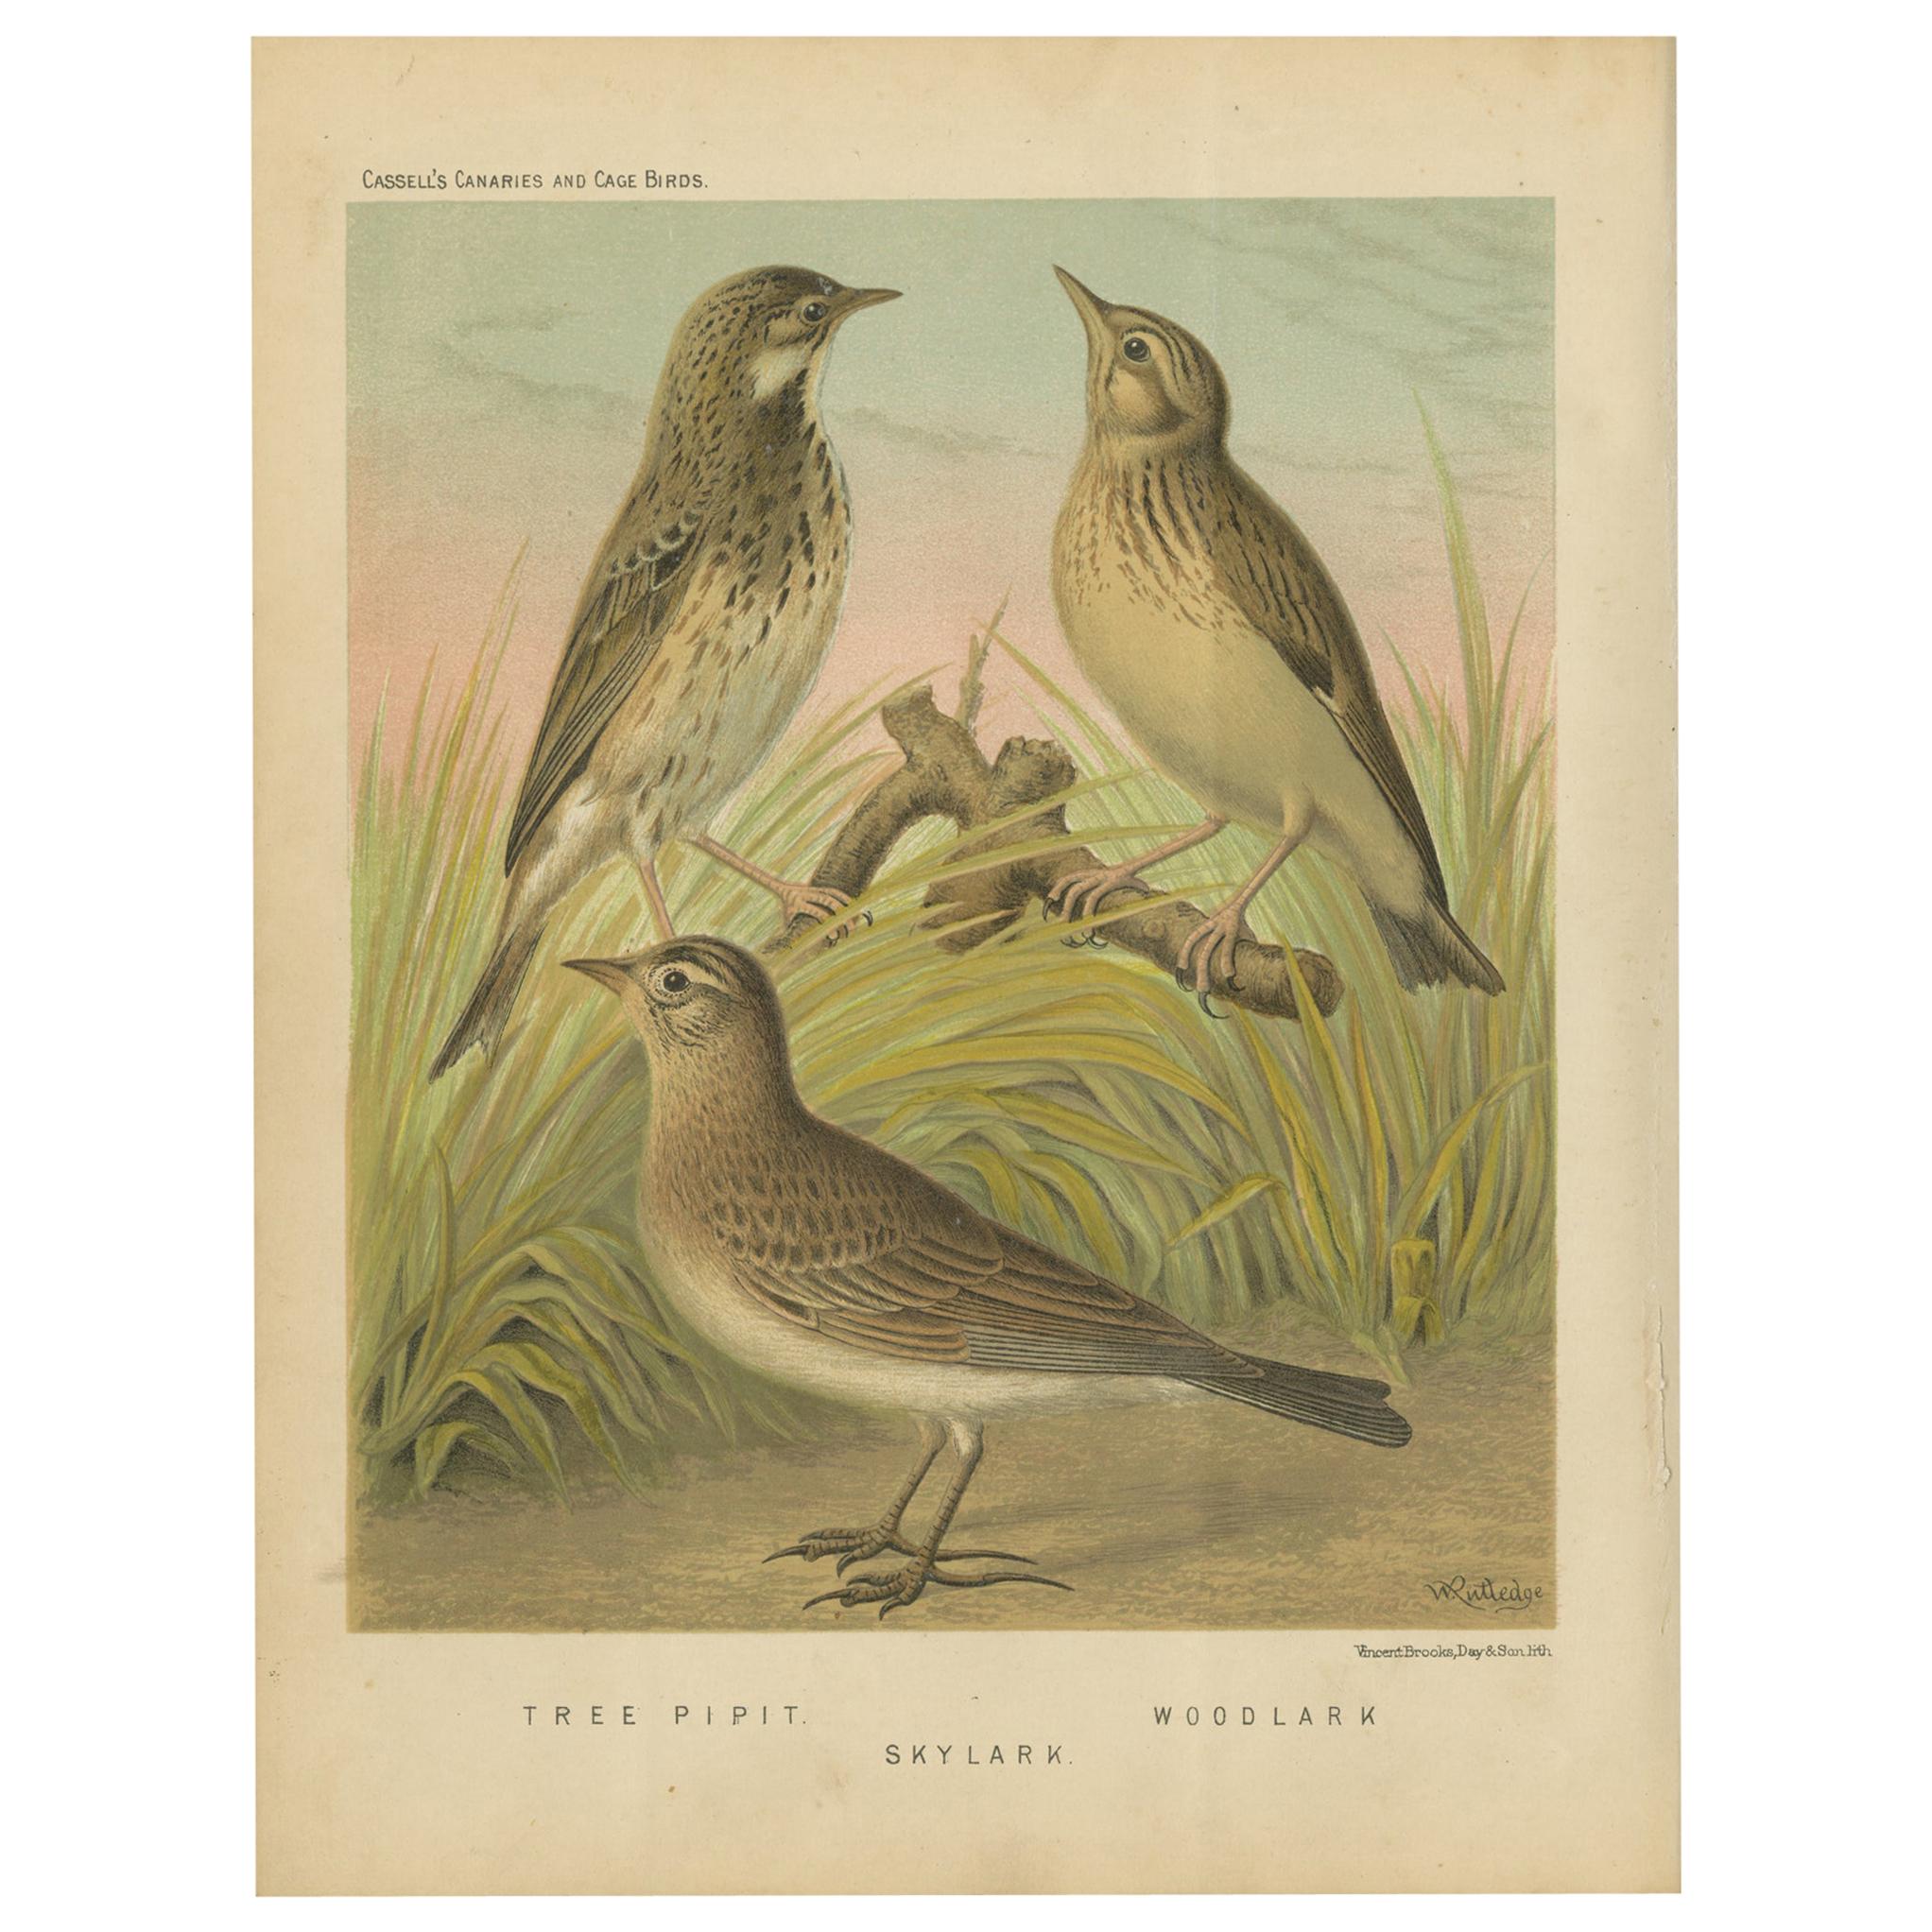 Antique Bird Print of the Tree Pipit, Skylark and Woodlark 'circa 1880' For Sale